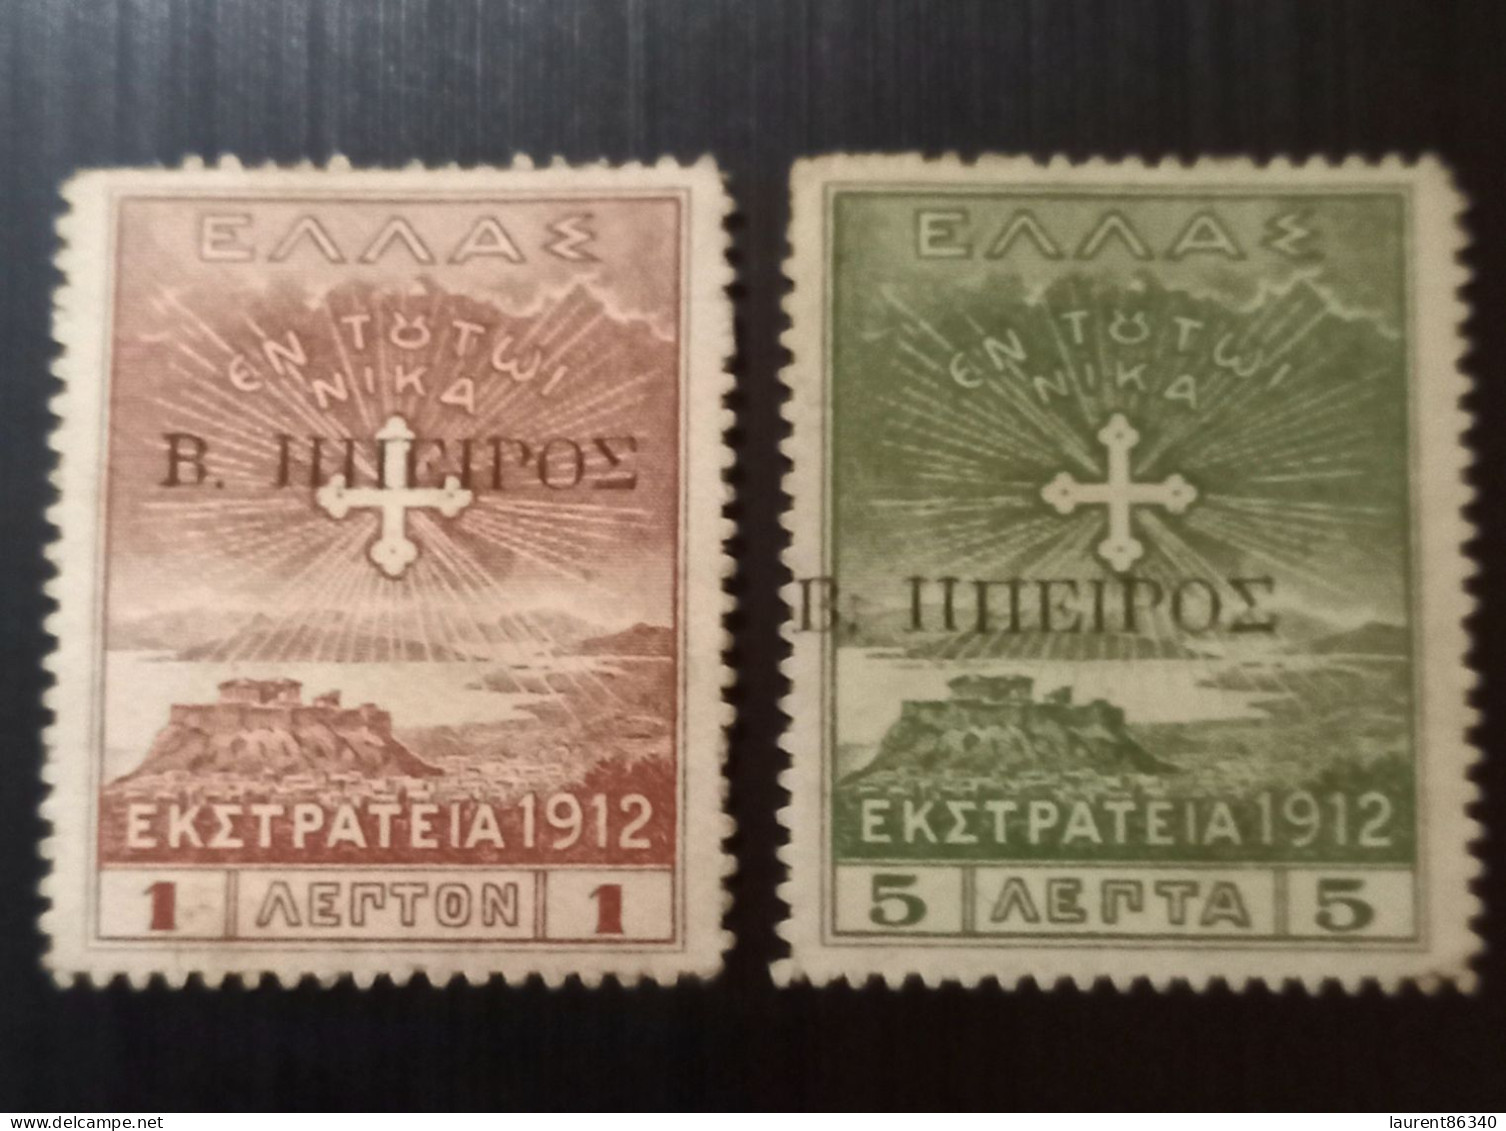 Grèce 1914 Épire Du Nord Occupation Surcharge " Β. ΗΠΕΙΡΟΣ "1915 Greek Postage Stamps Of 1913 Overprinted "B. HΠΕΙΡΟΣ - Epiro Del Norte